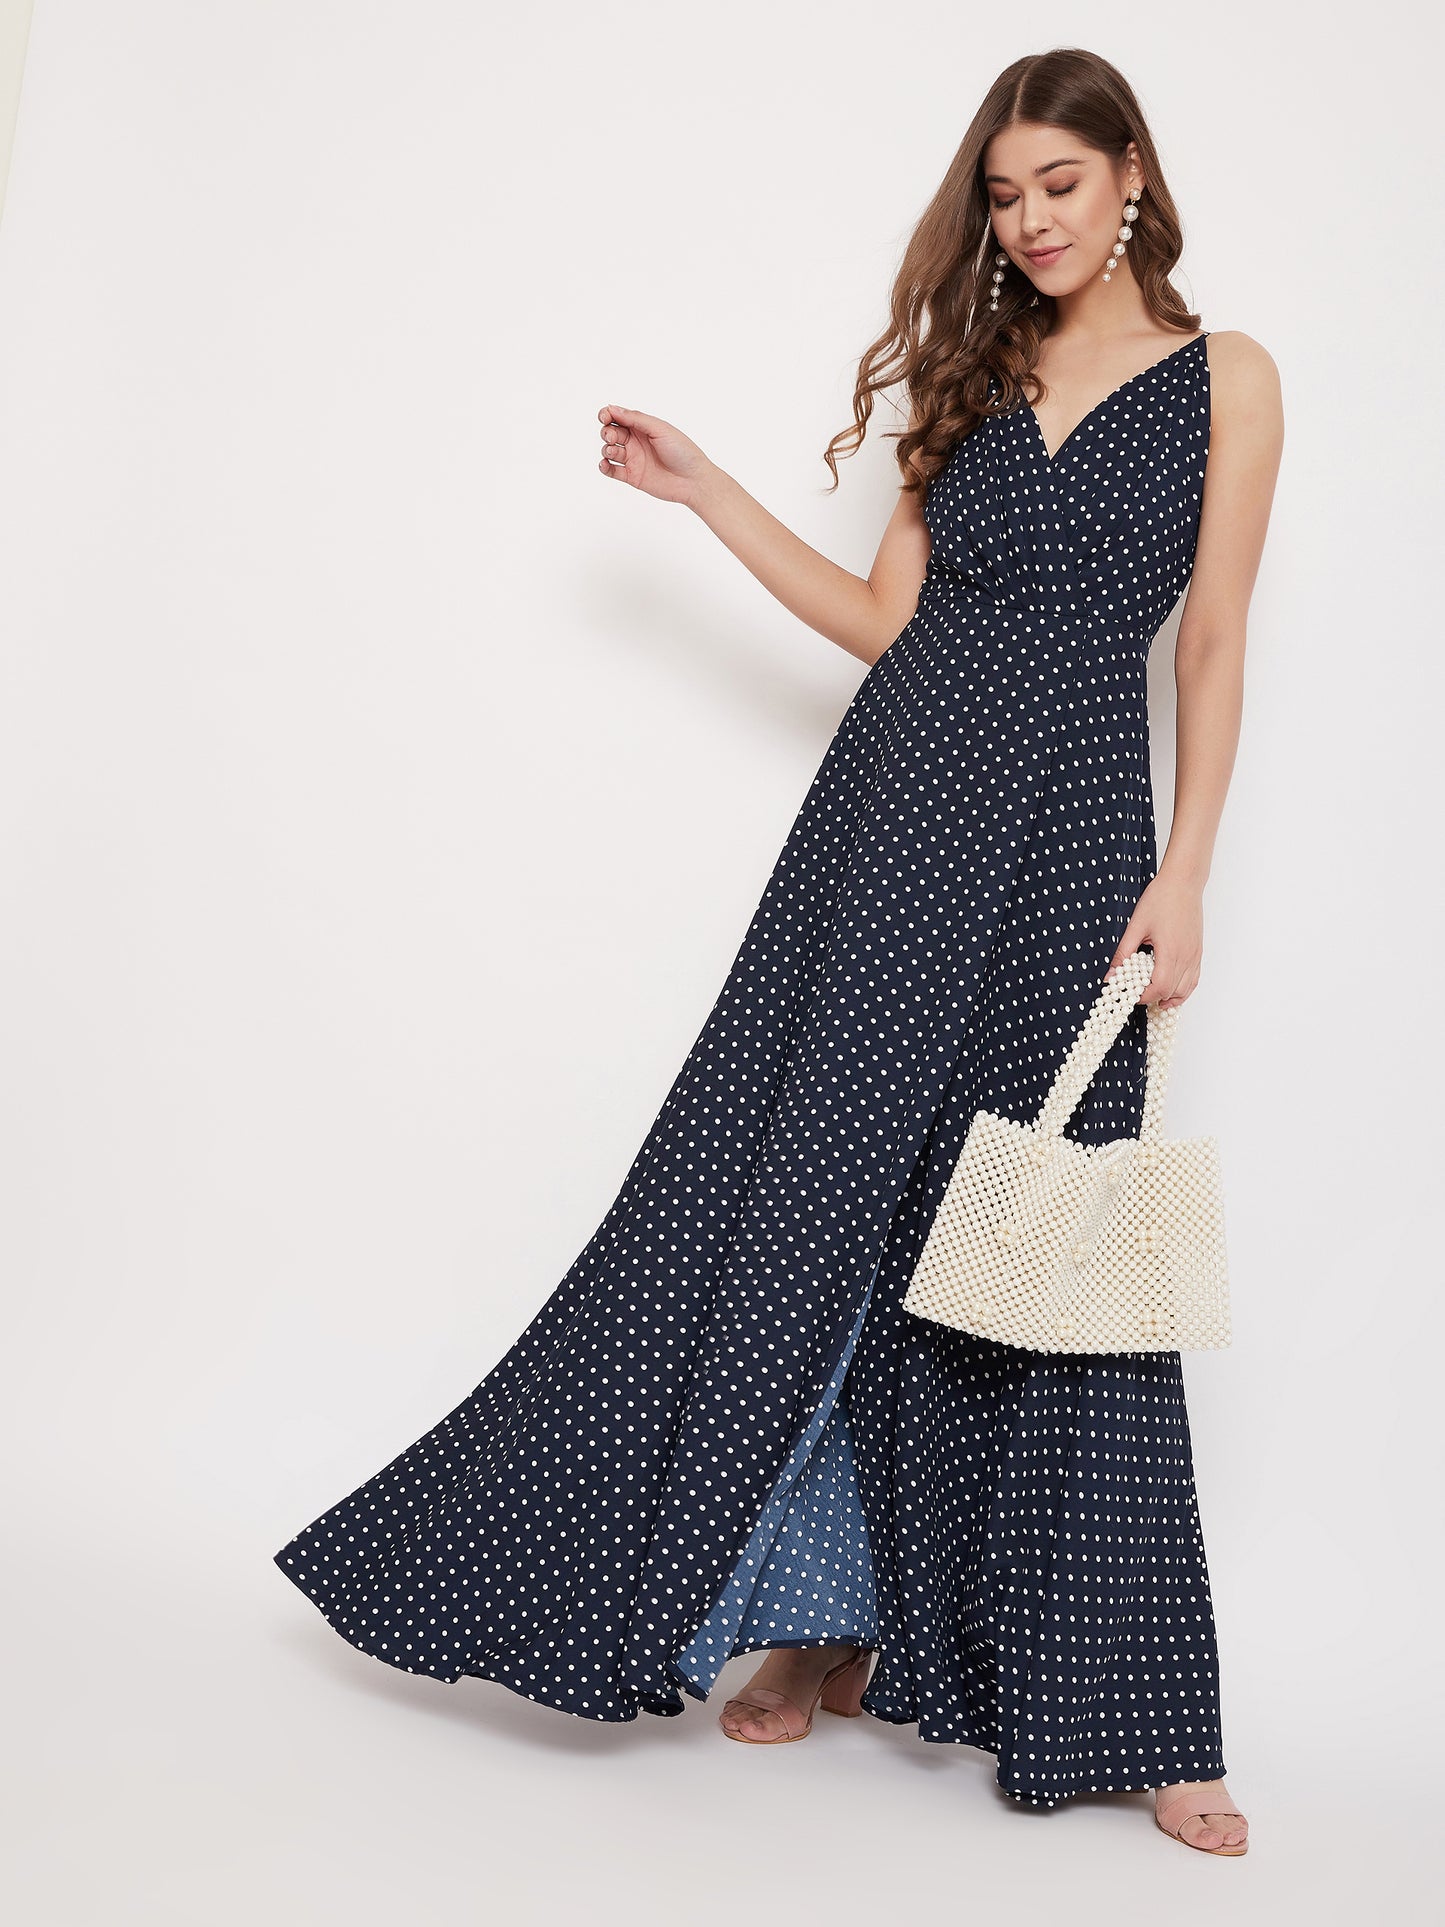 Berrylush Women Navy Blue & White Polka Dot Printed V-Neck Thigh-High Slit Flared Maxi Dress